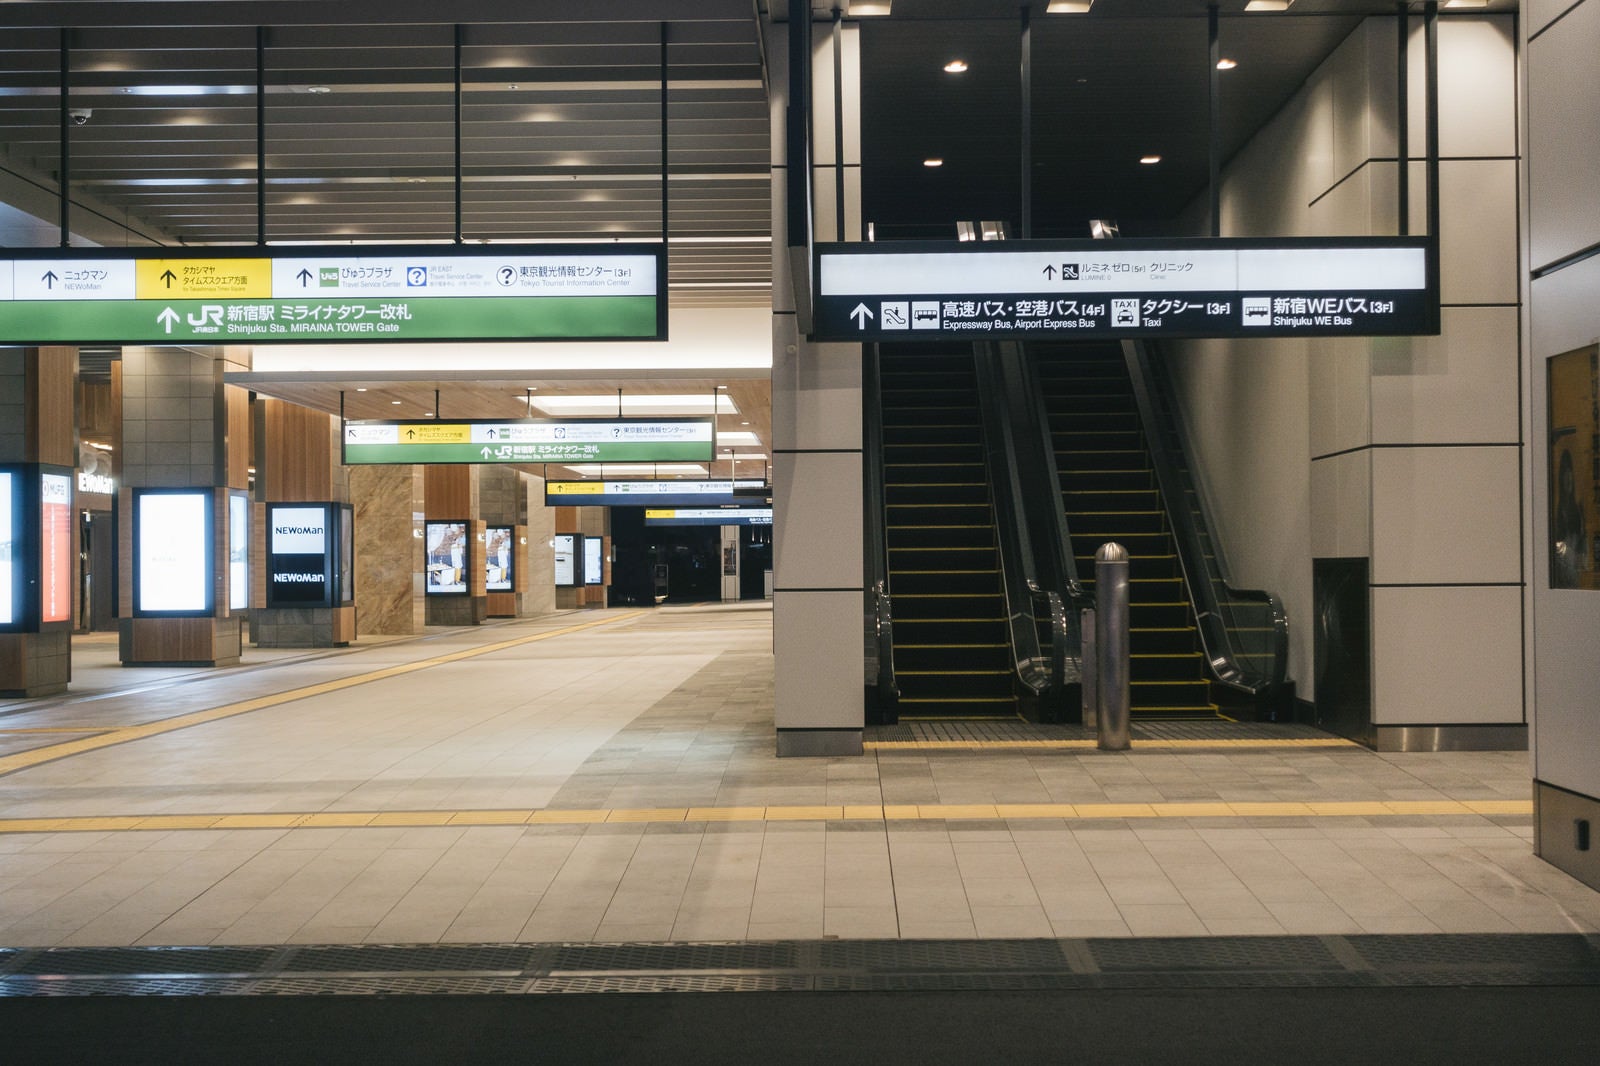 「JR新宿駅とバスタ新宿入口」の写真